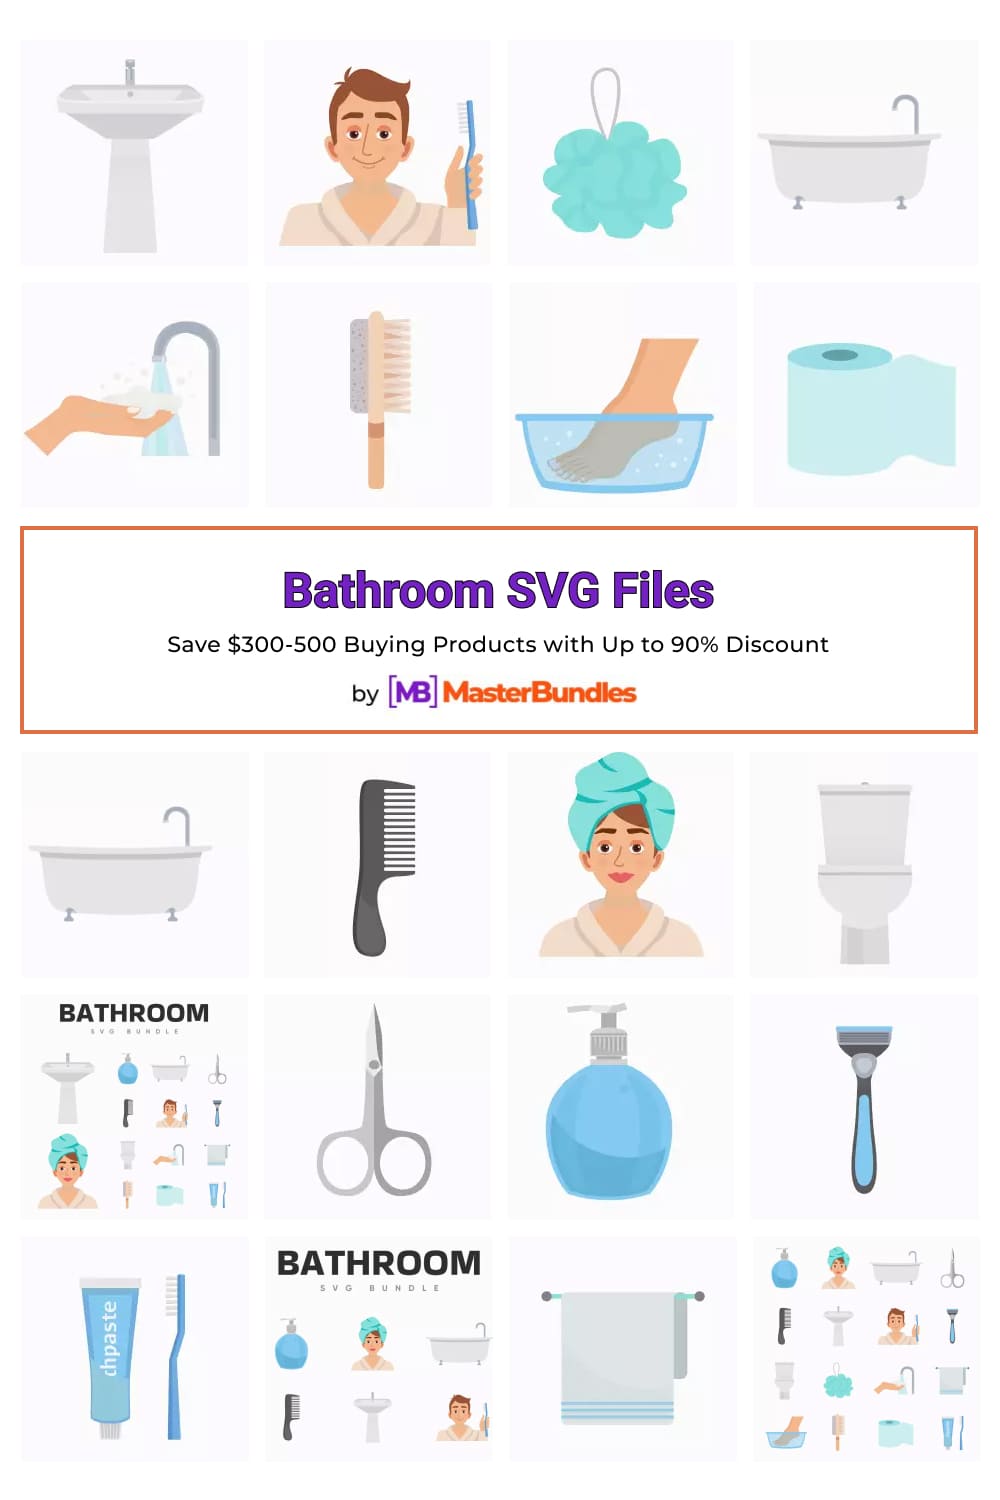 Bathroom SVG Files Pinterest image.